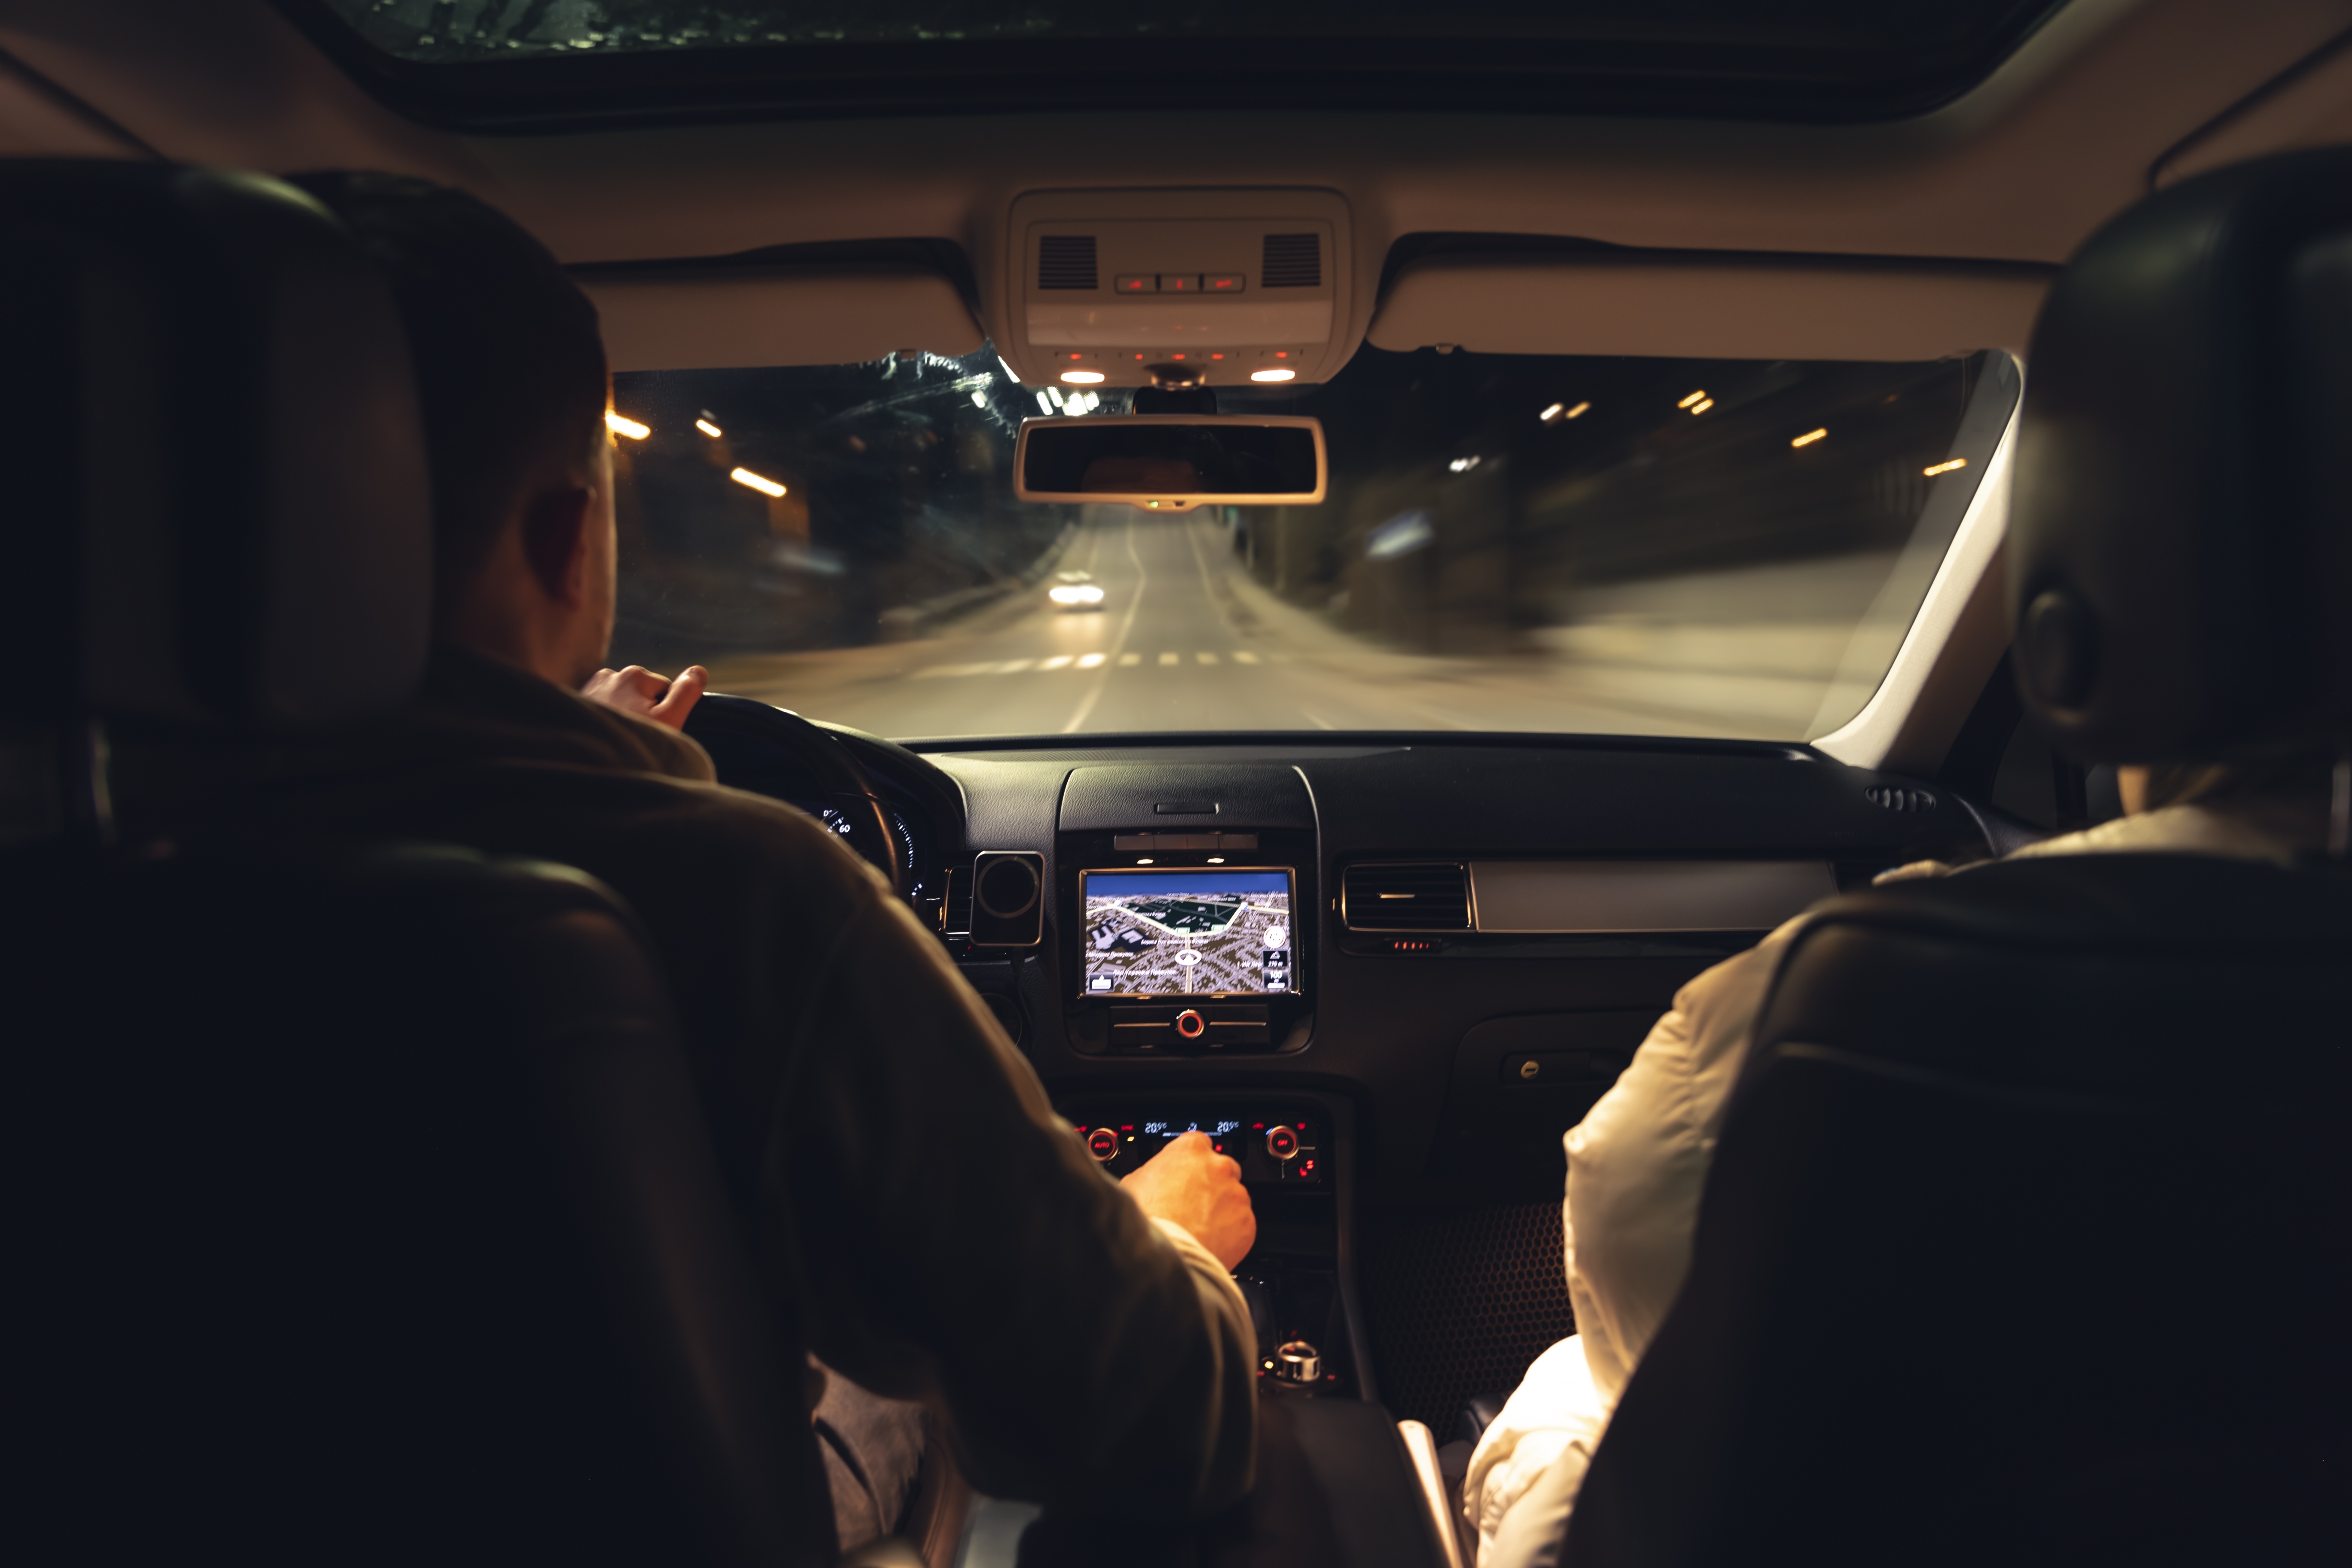 Driving | Source: Shutterstock